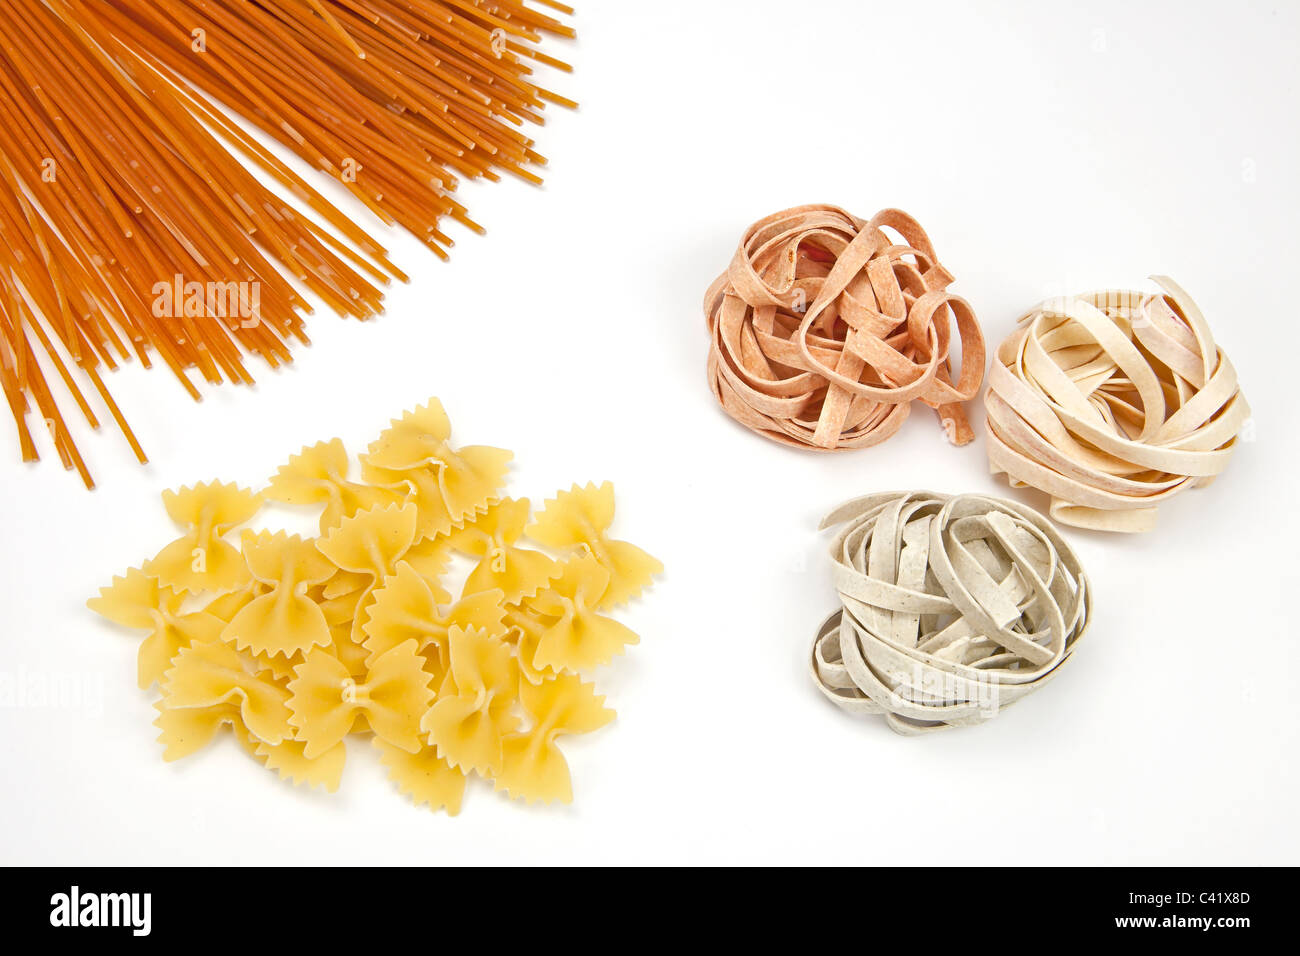 drei verschiedene Arten von Nudeln - Spaghetti, Farfalle, tagliatelle Stockfoto